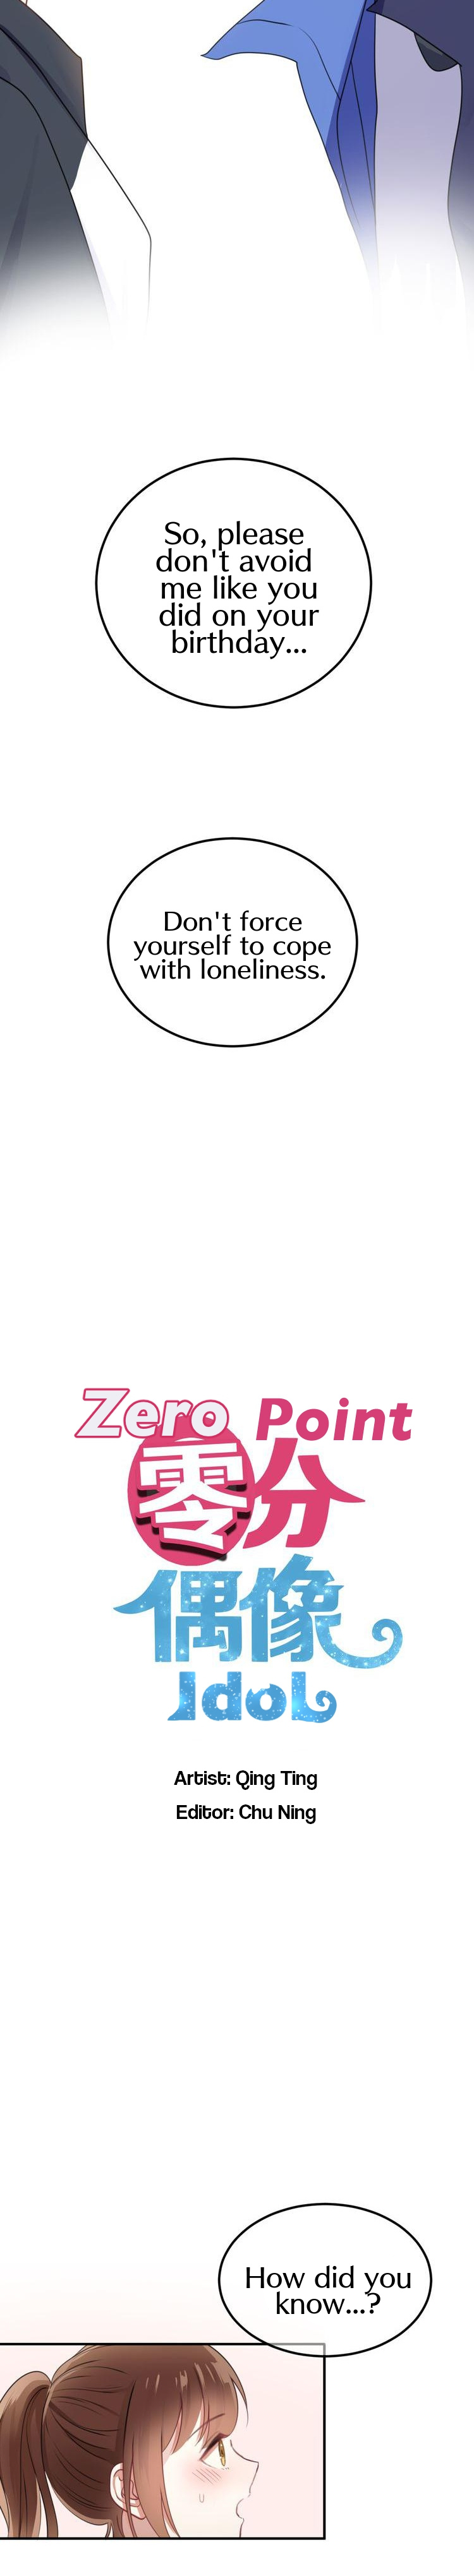 Zero Point Idol - Page 2